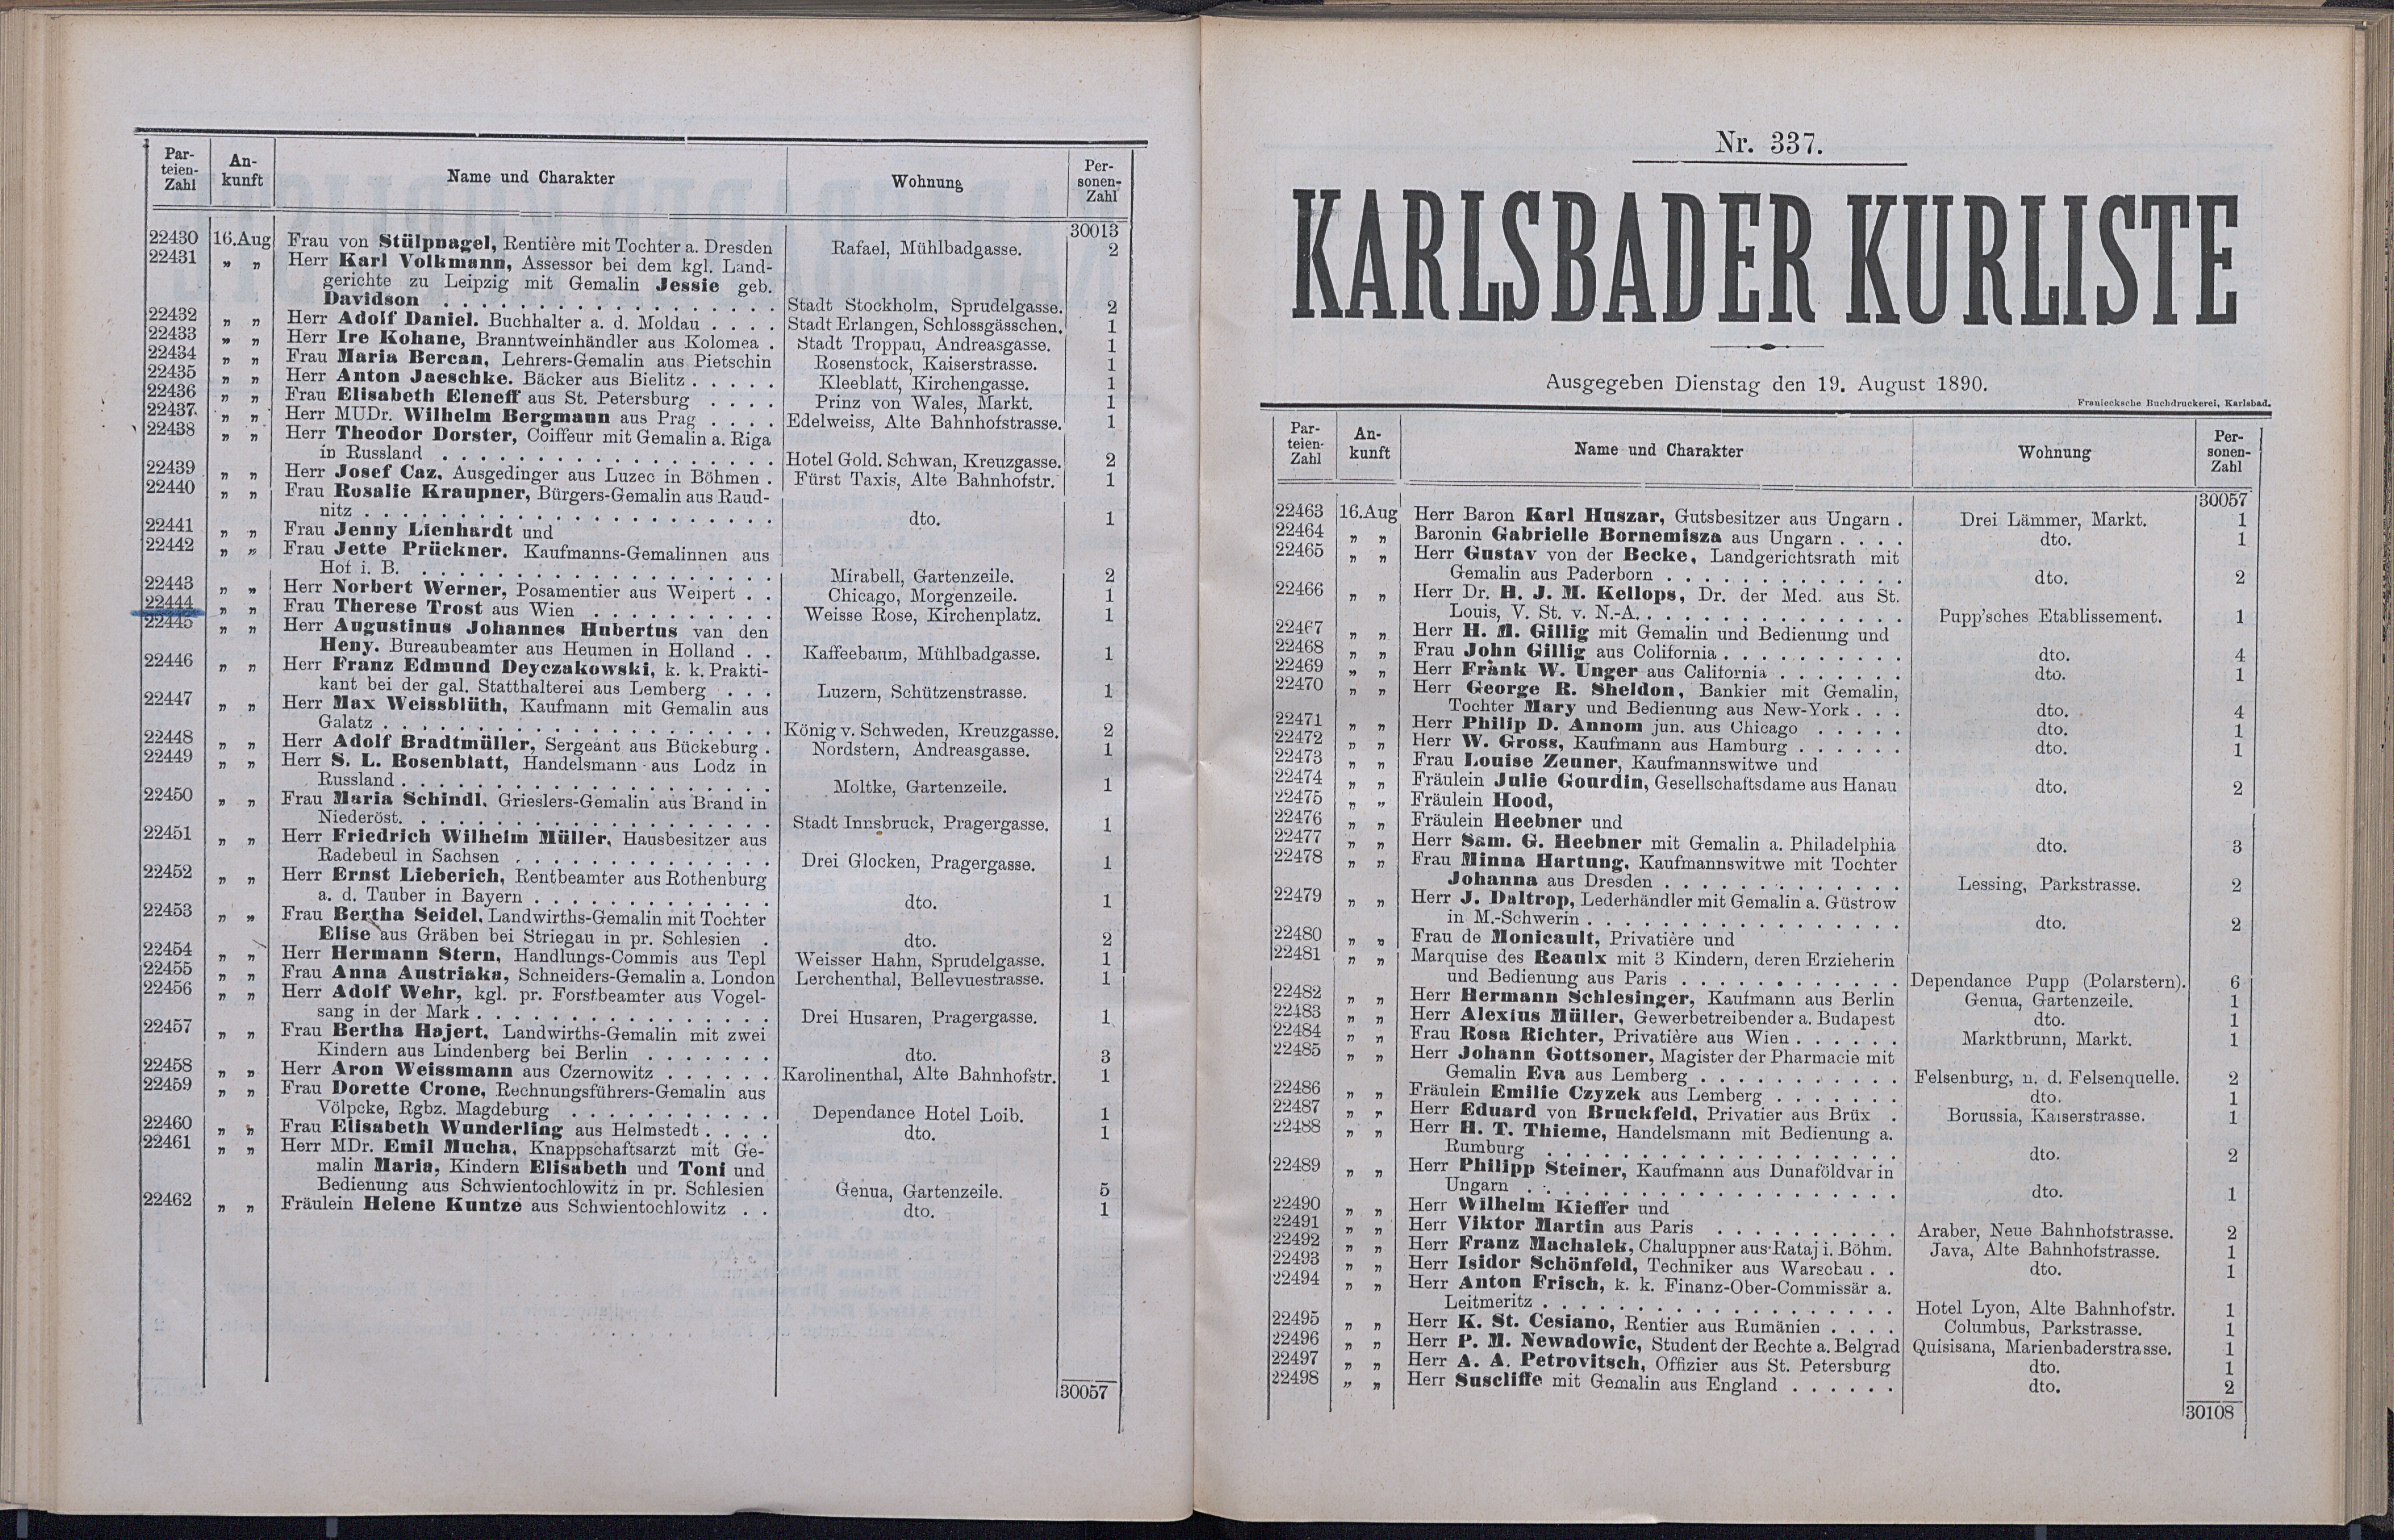 356. soap-kv_knihovna_karlsbader-kurliste-1890_3570